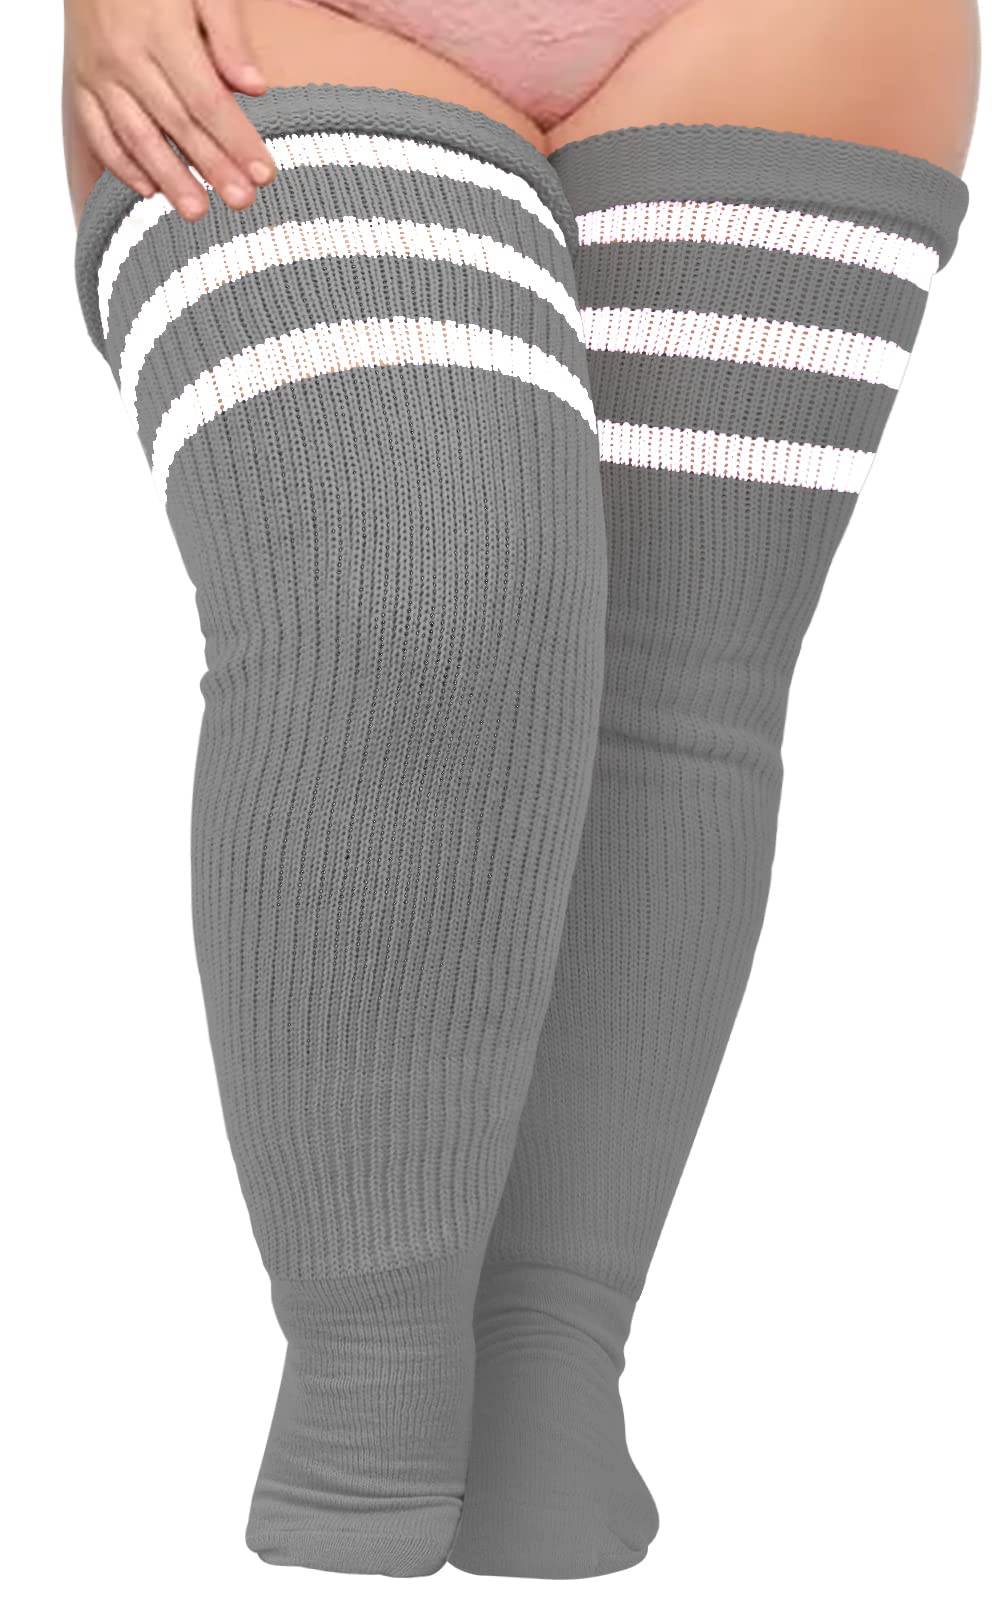 Plus Size Thigh High Socks Striped- Limestone Grey & White - Moon Wood